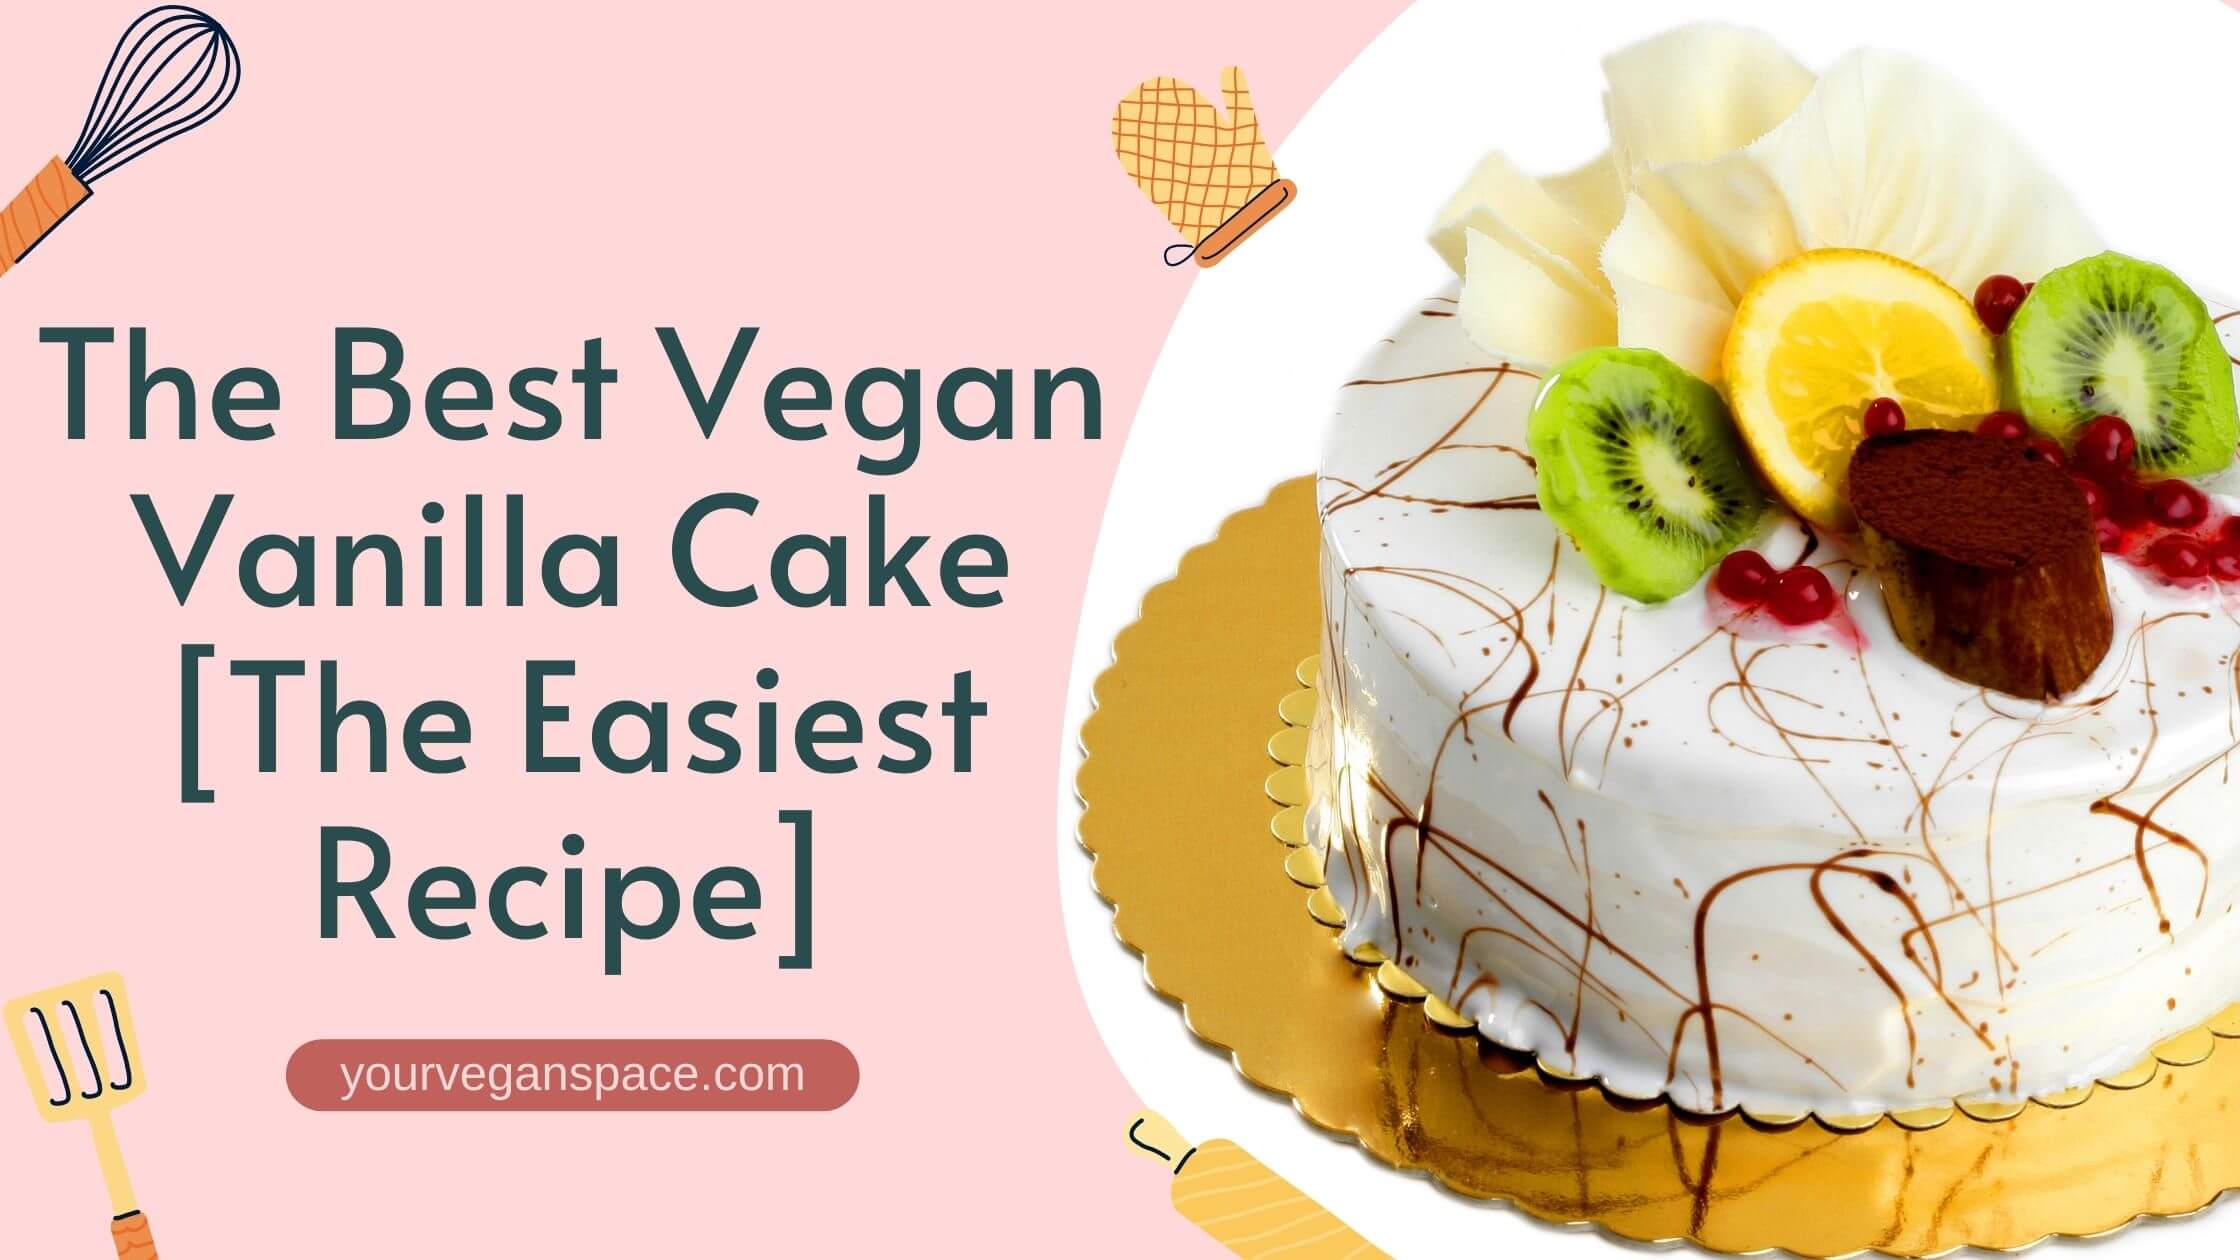 he Best Vegan Vanilla Cake [The Easiest Recipe]